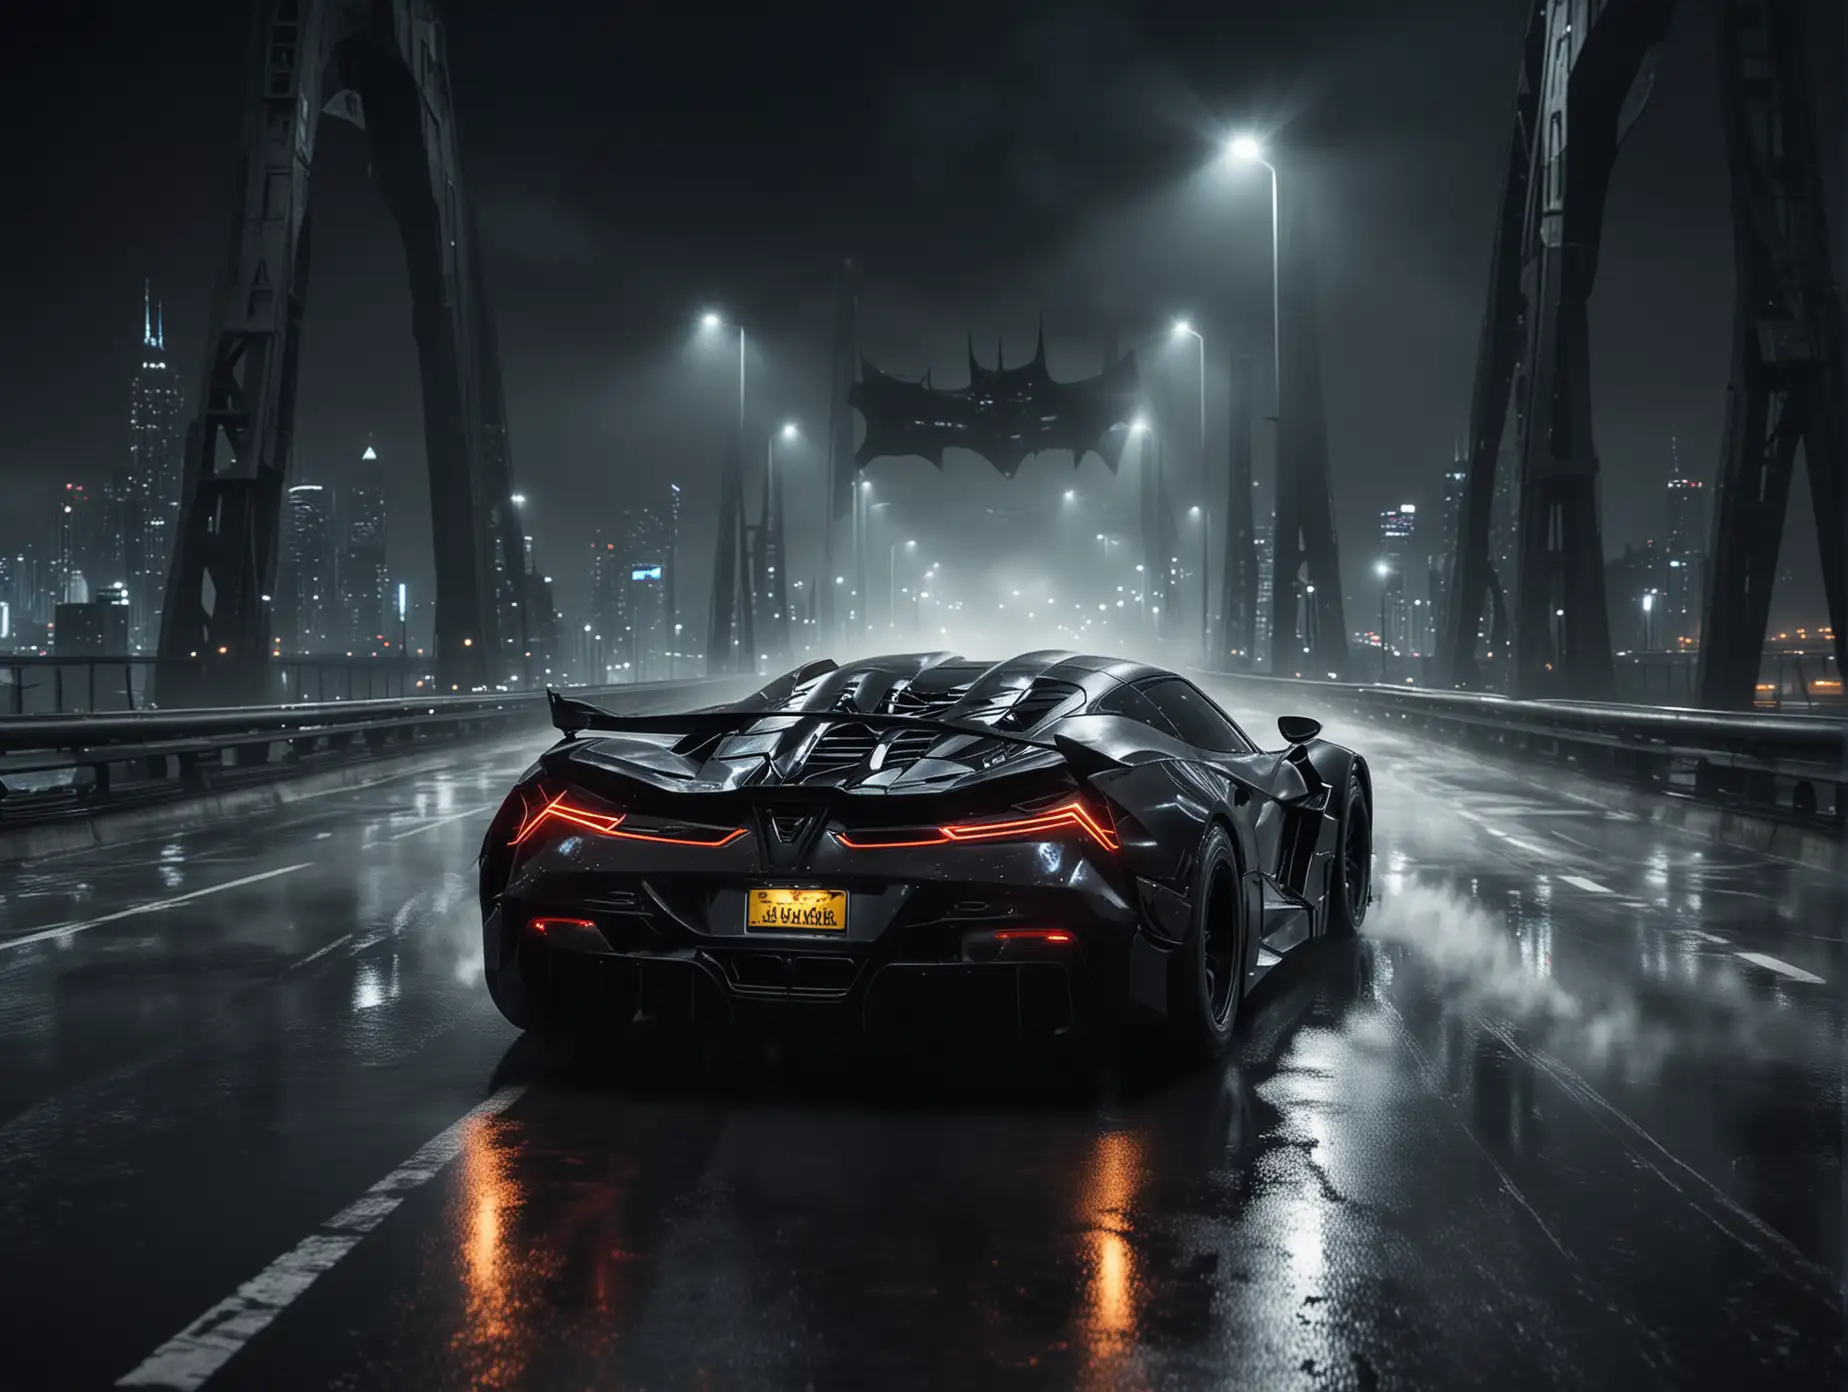 Batman futuristic concert. Drifting cars driving at night city on big bridge background black color dark rear view